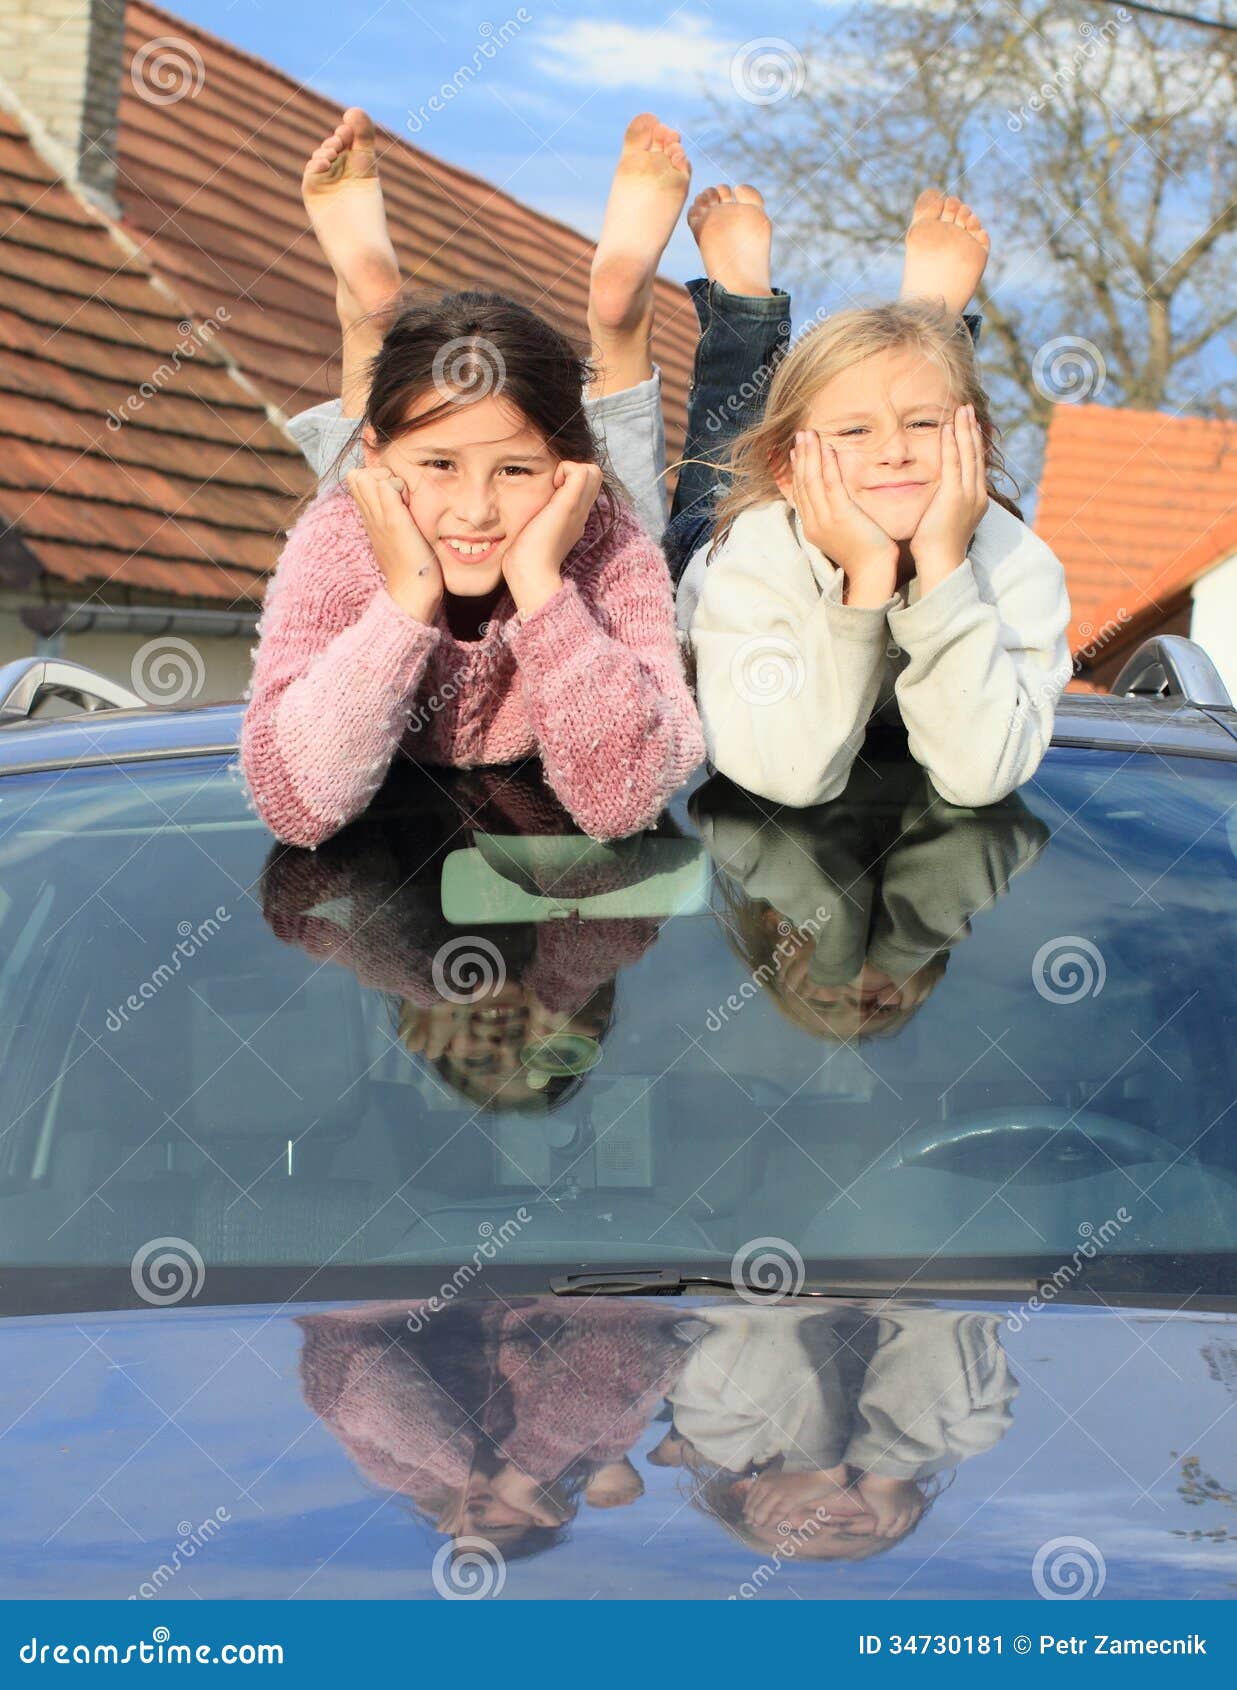 kids - girls on windscreen of a car